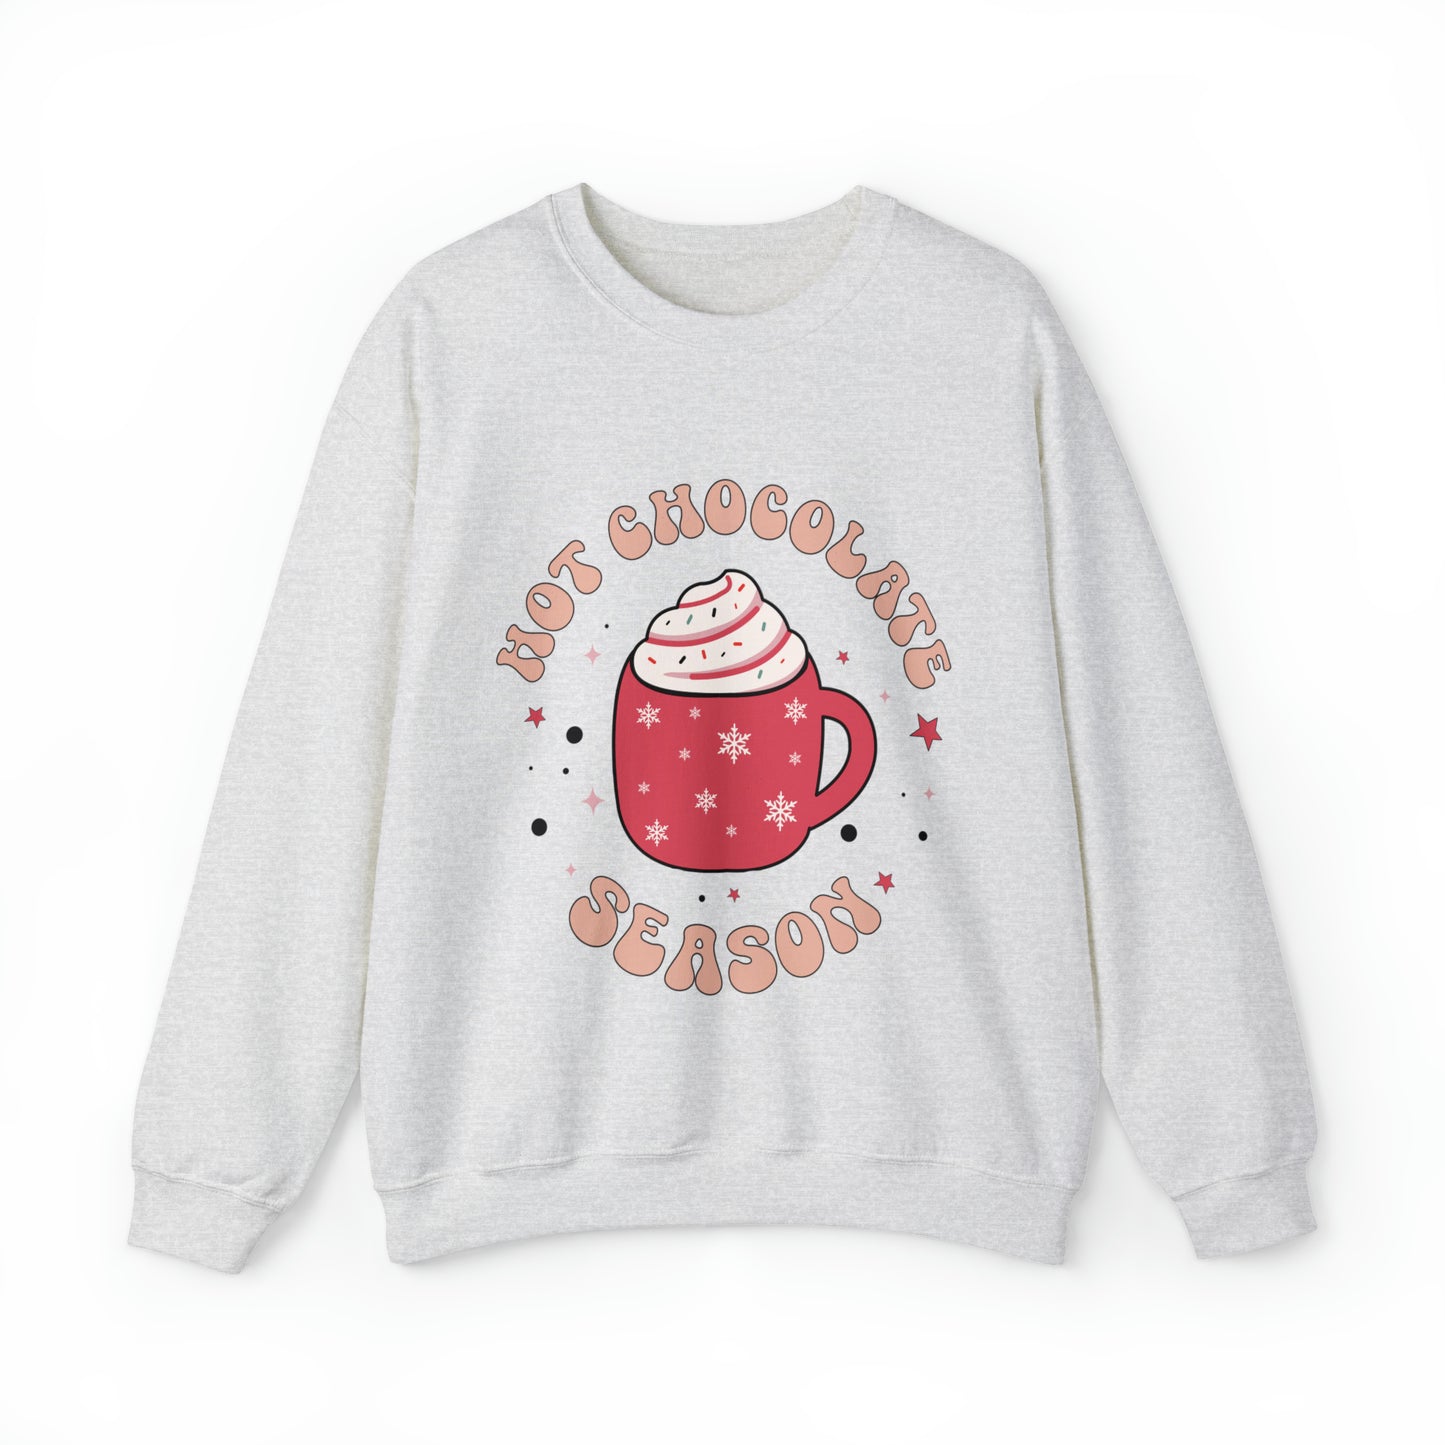 Hot Chocolate Season Women's Christmas Winter Crewneck Sweatshirt